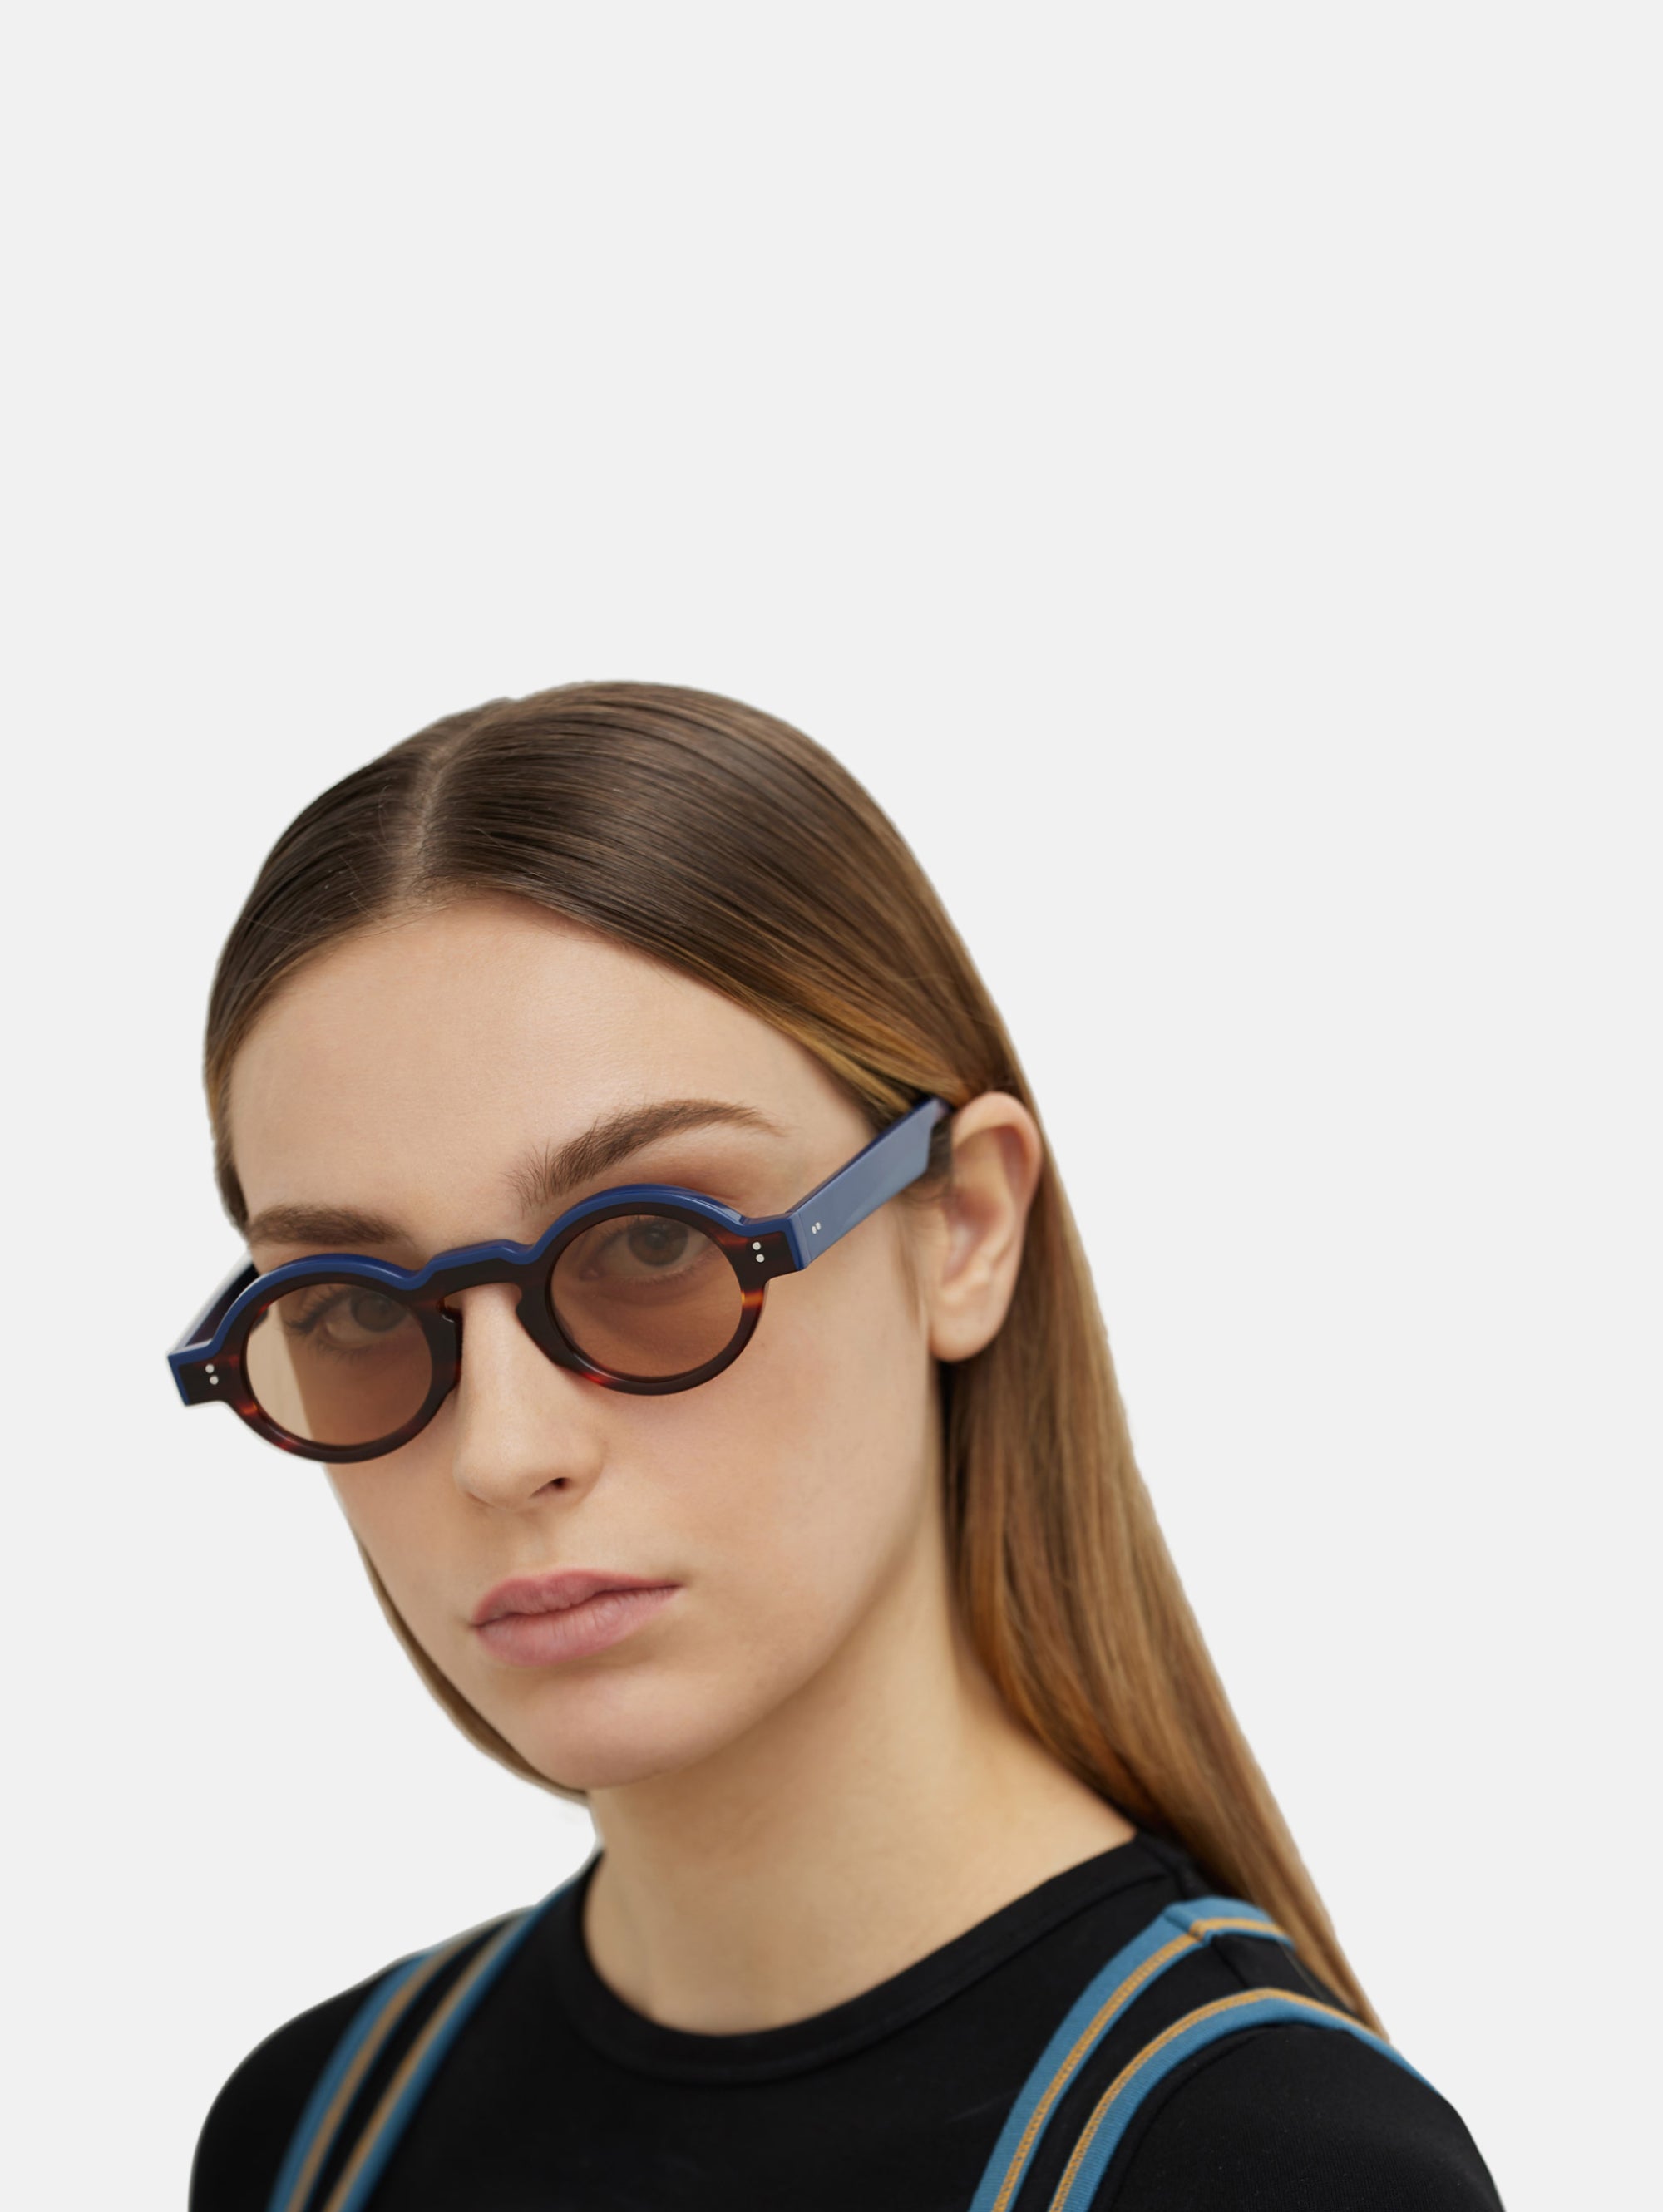 Mirafiori Havana and Blue sunglasses